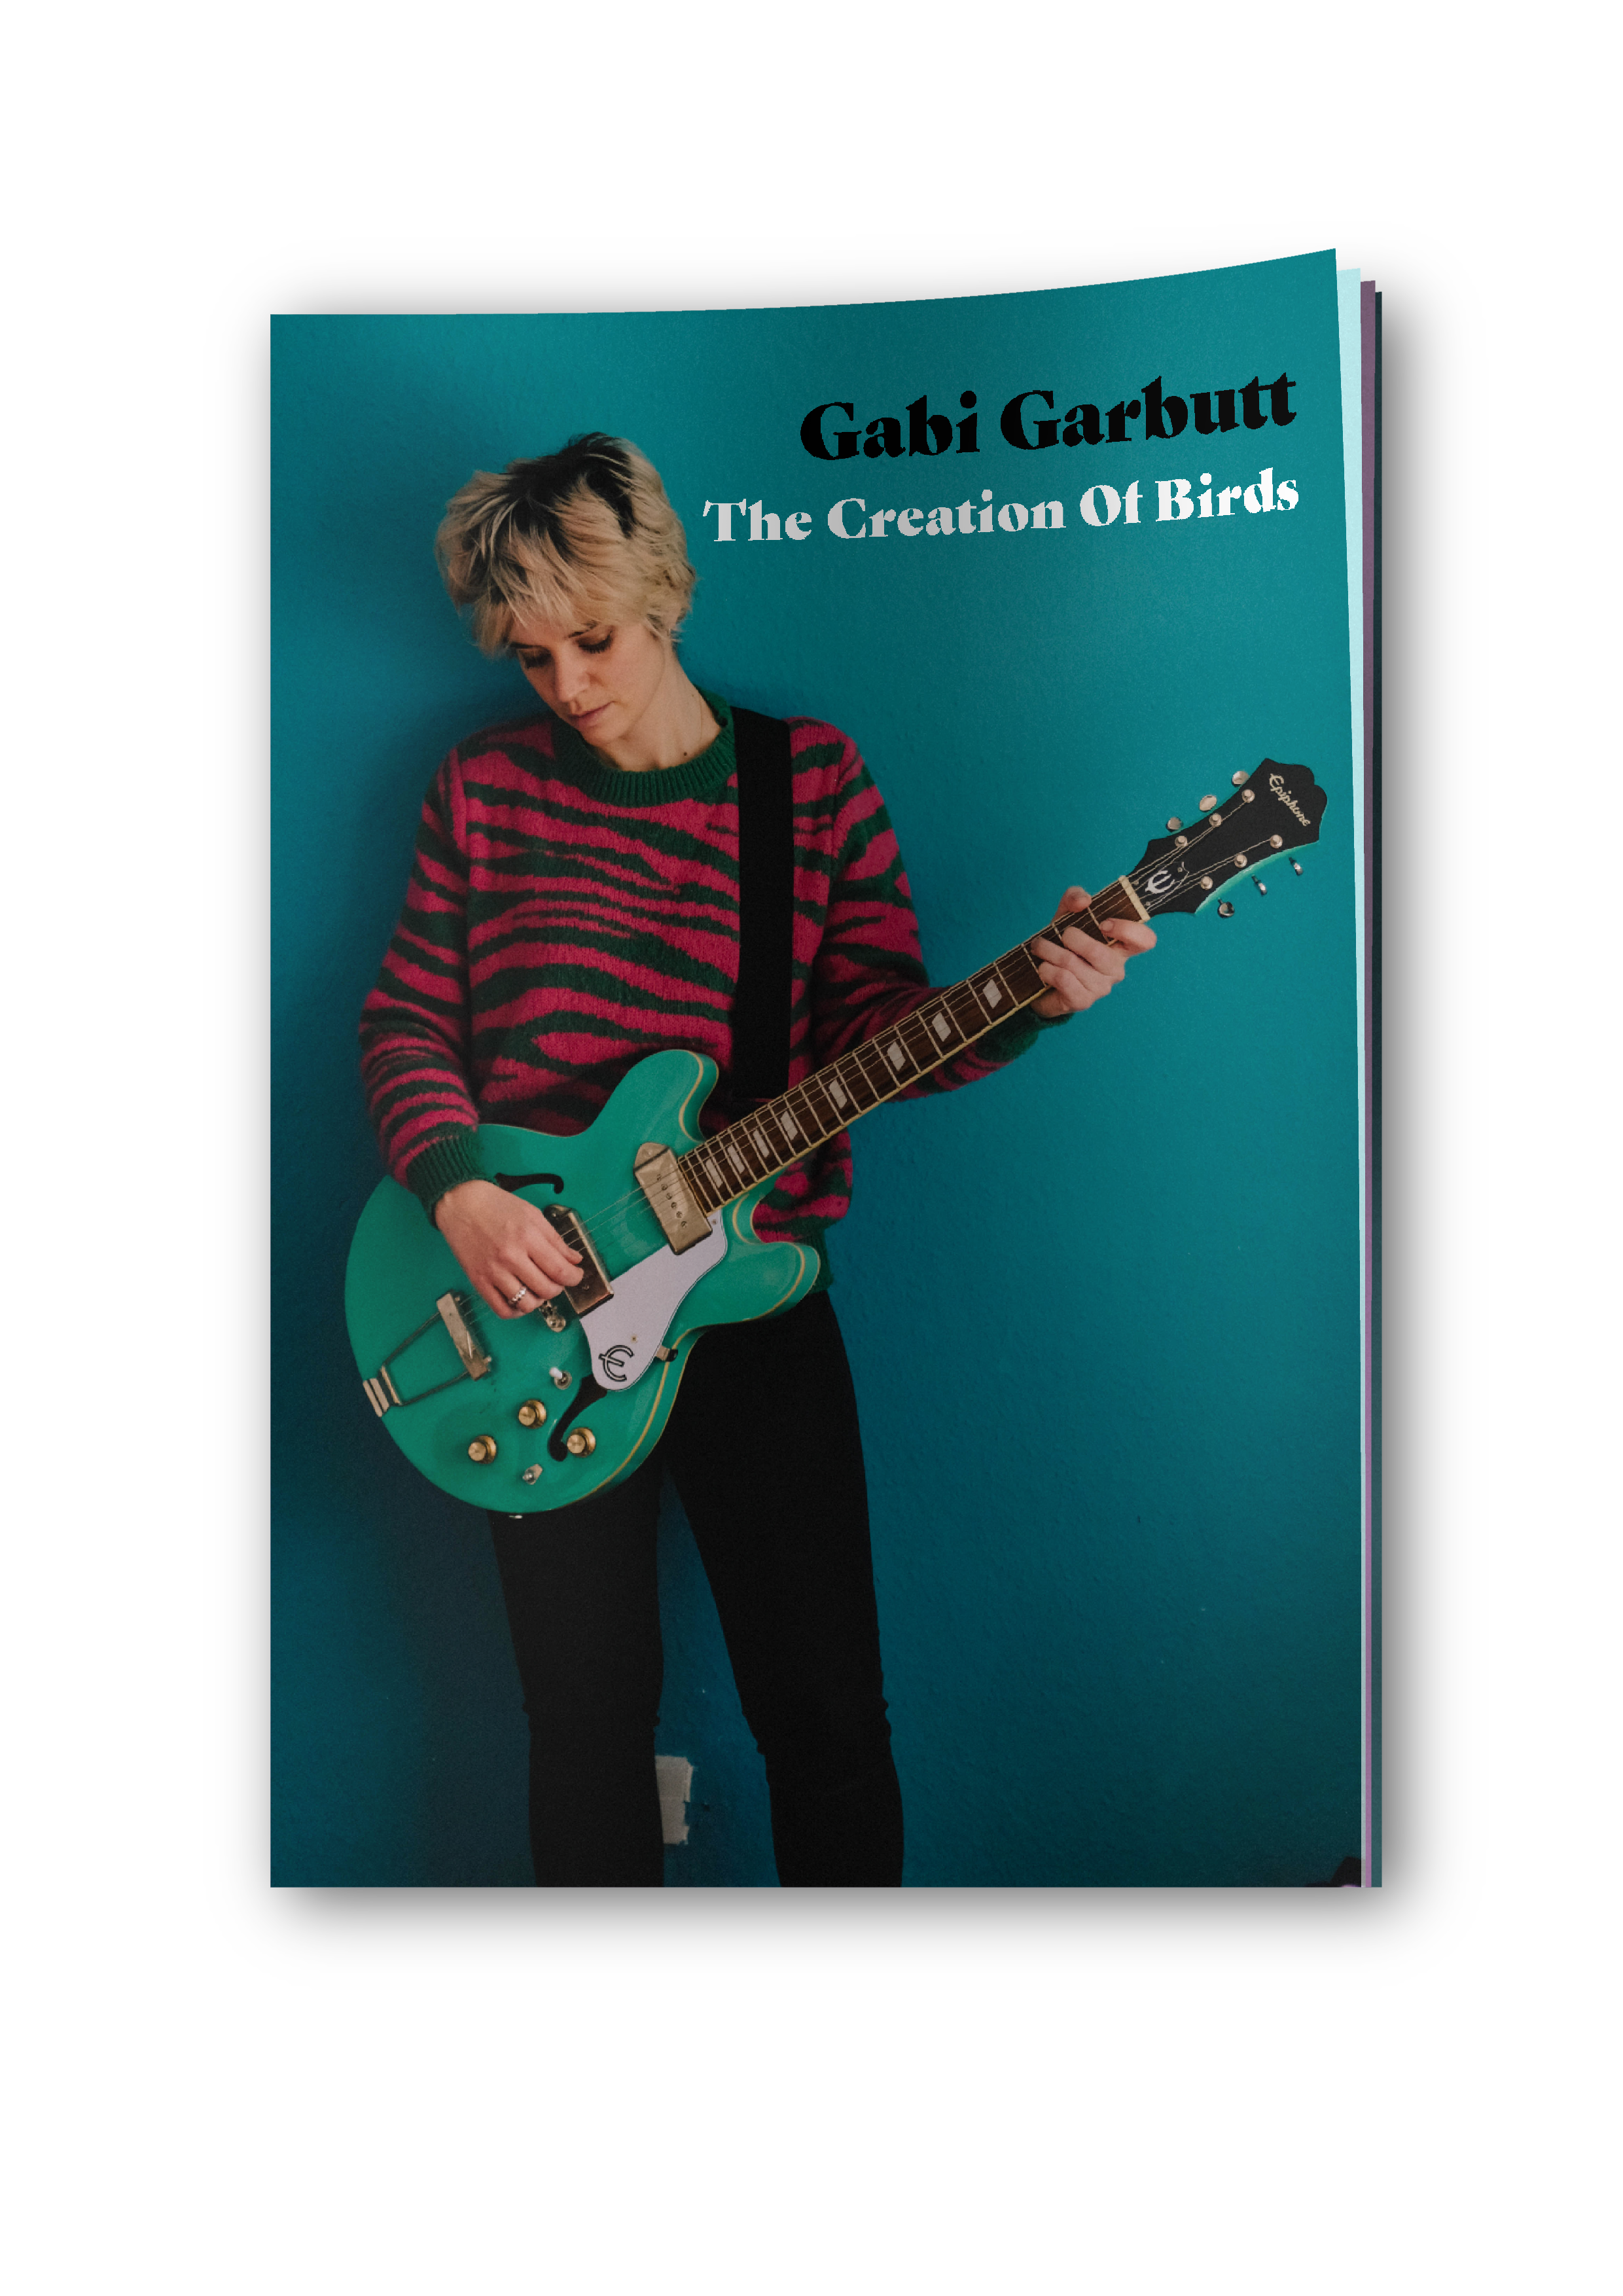 Gabi Garbutt 'The Creation of Birds' - Limited Edition CD & Zine Duo